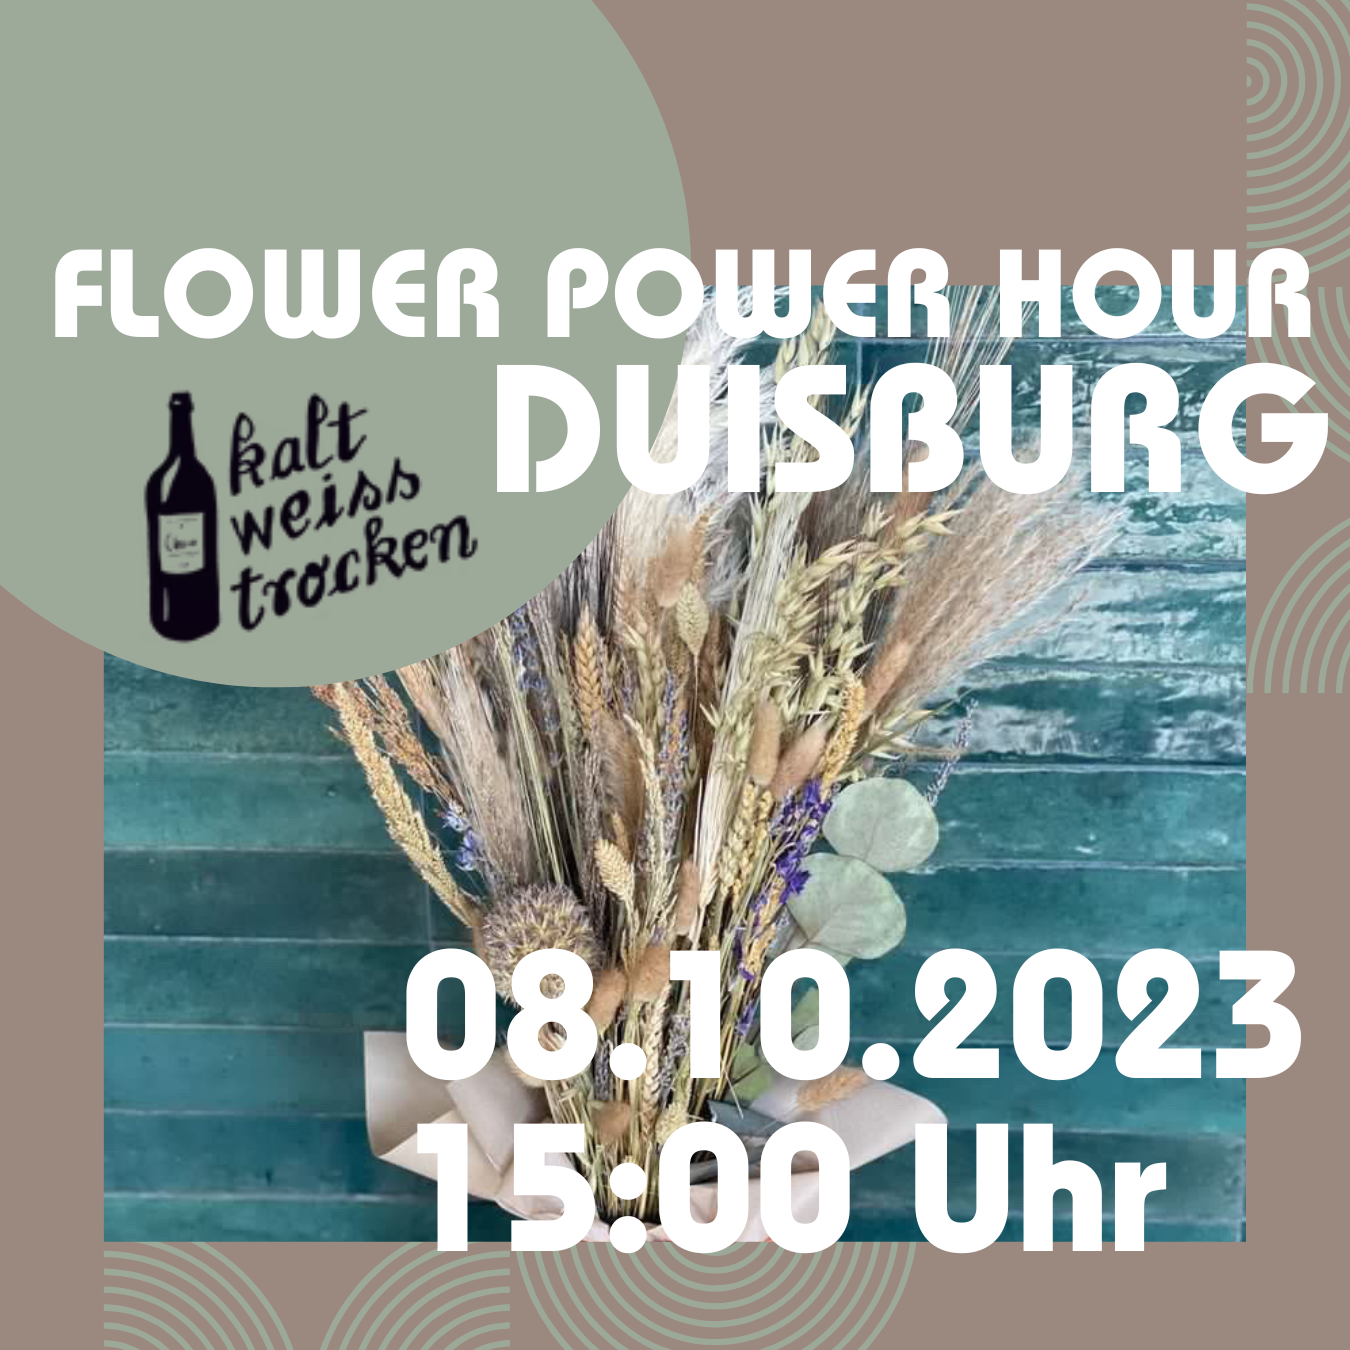 FLOWER POWER HOUR - Trockenblumenbouquet Workshop kalt.weiss.trocken. Duisburg 08.10.2023 15 Uhr